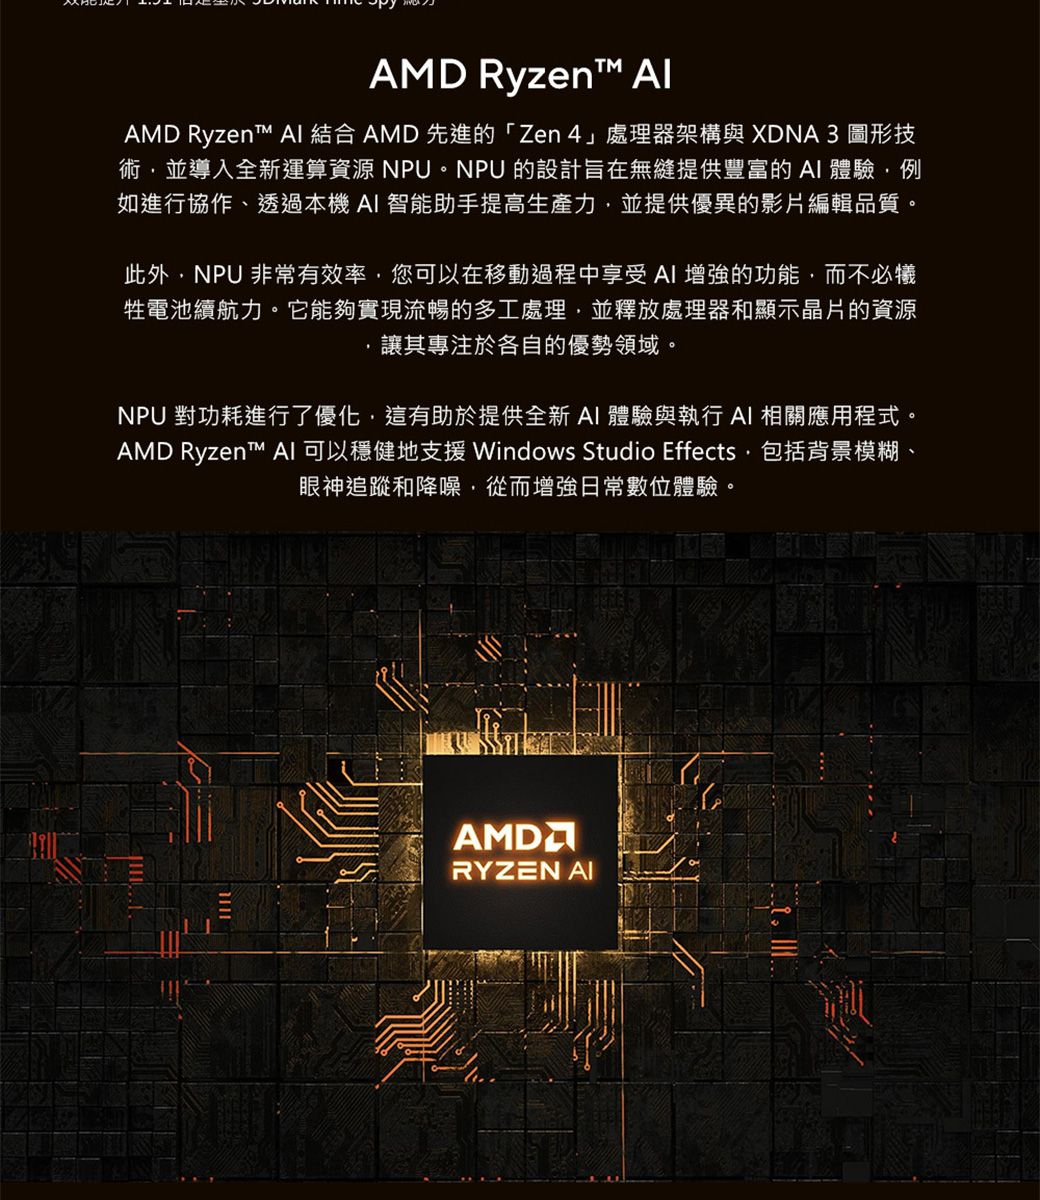 AMD Ryzen AlAMD Ryzent   AMD 先進的「Zen」處理器架構與 XDNA3 圖形技術並導入全新運算資源 NPU。NPU 的設計旨在無縫提供豐富的體驗例如進行協作、透過本機AI 智能助手提高生產力並提供優異的影片編輯品質。此外NPU 非常有效率您可以在移動過程中享受 AI 增強的功能,而不必犧牲電池續航力。它能夠實現流暢的多工處理,並釋放處理器和顯示晶片的資源讓其專注於各自的優勢領域。NPU 對功耗進行了優化,這有助於提供全新 AI 體驗與執行 AI 相關應用程式。AMD Ryzent™ AI 可以穩健地支援 Windows Studio Effects,包括背景模糊、眼神追蹤和降噪,從而增強日常數位體驗。AMDRYZEN AI